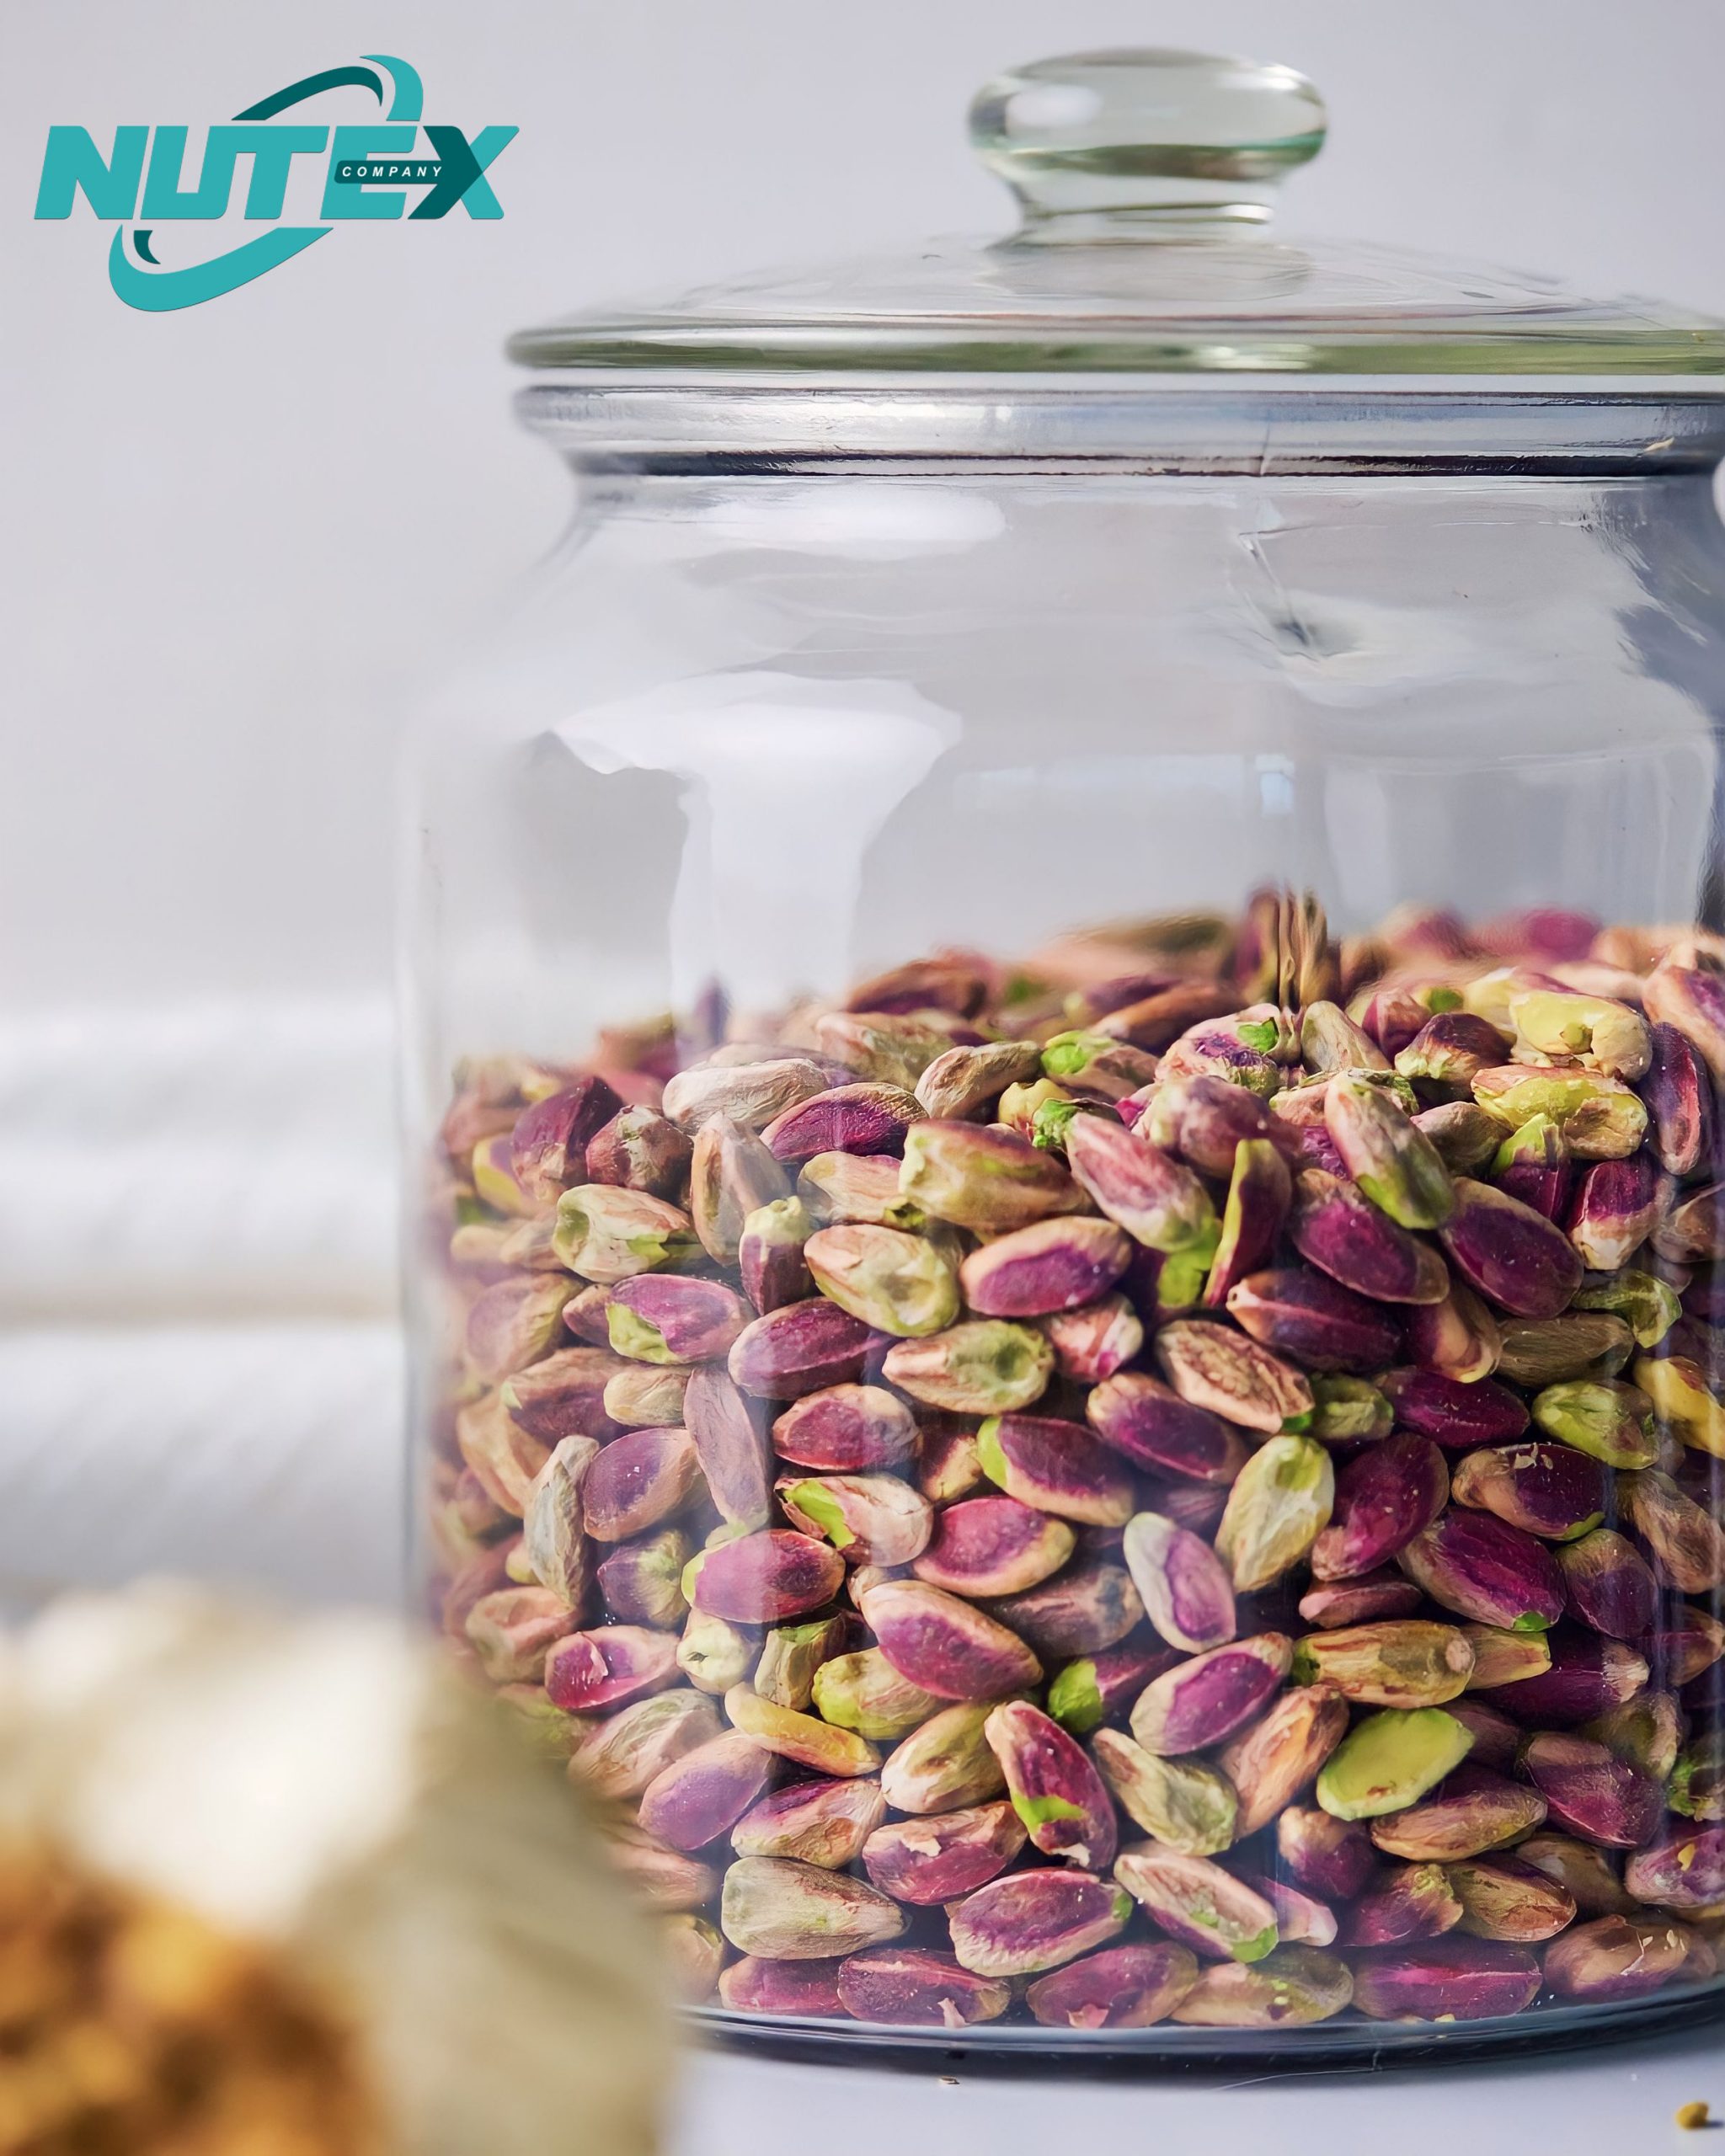 6 Health Benefits of Pistachios Nuts - Nutex pistachio company